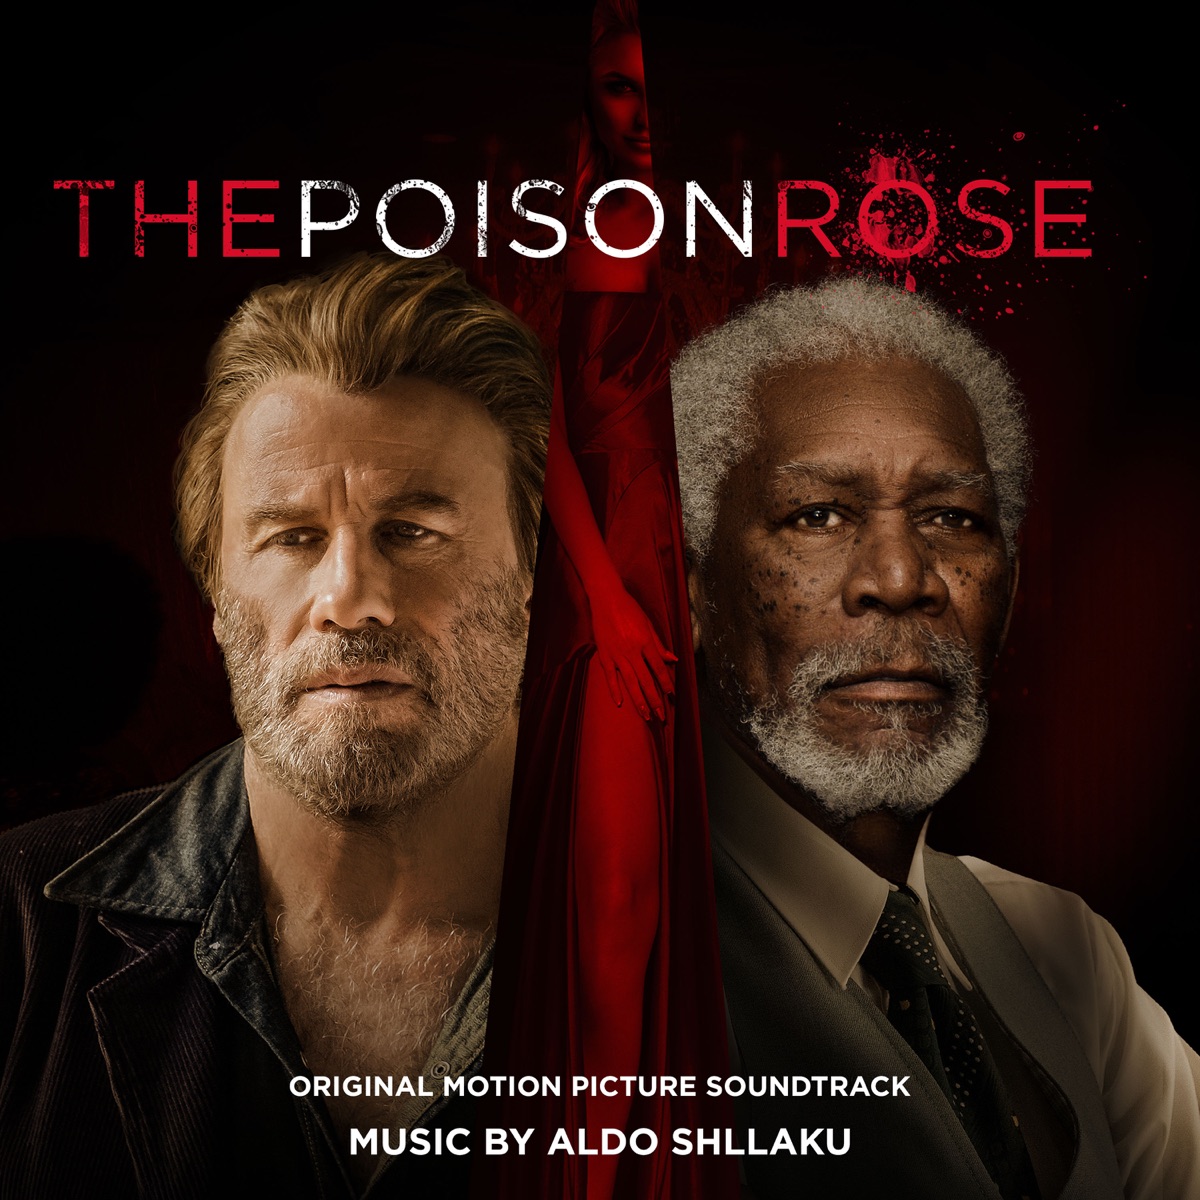 The Poison Rose (Original Motion Picture Soundtrack) by Aldo Shllaku on  Apple Music